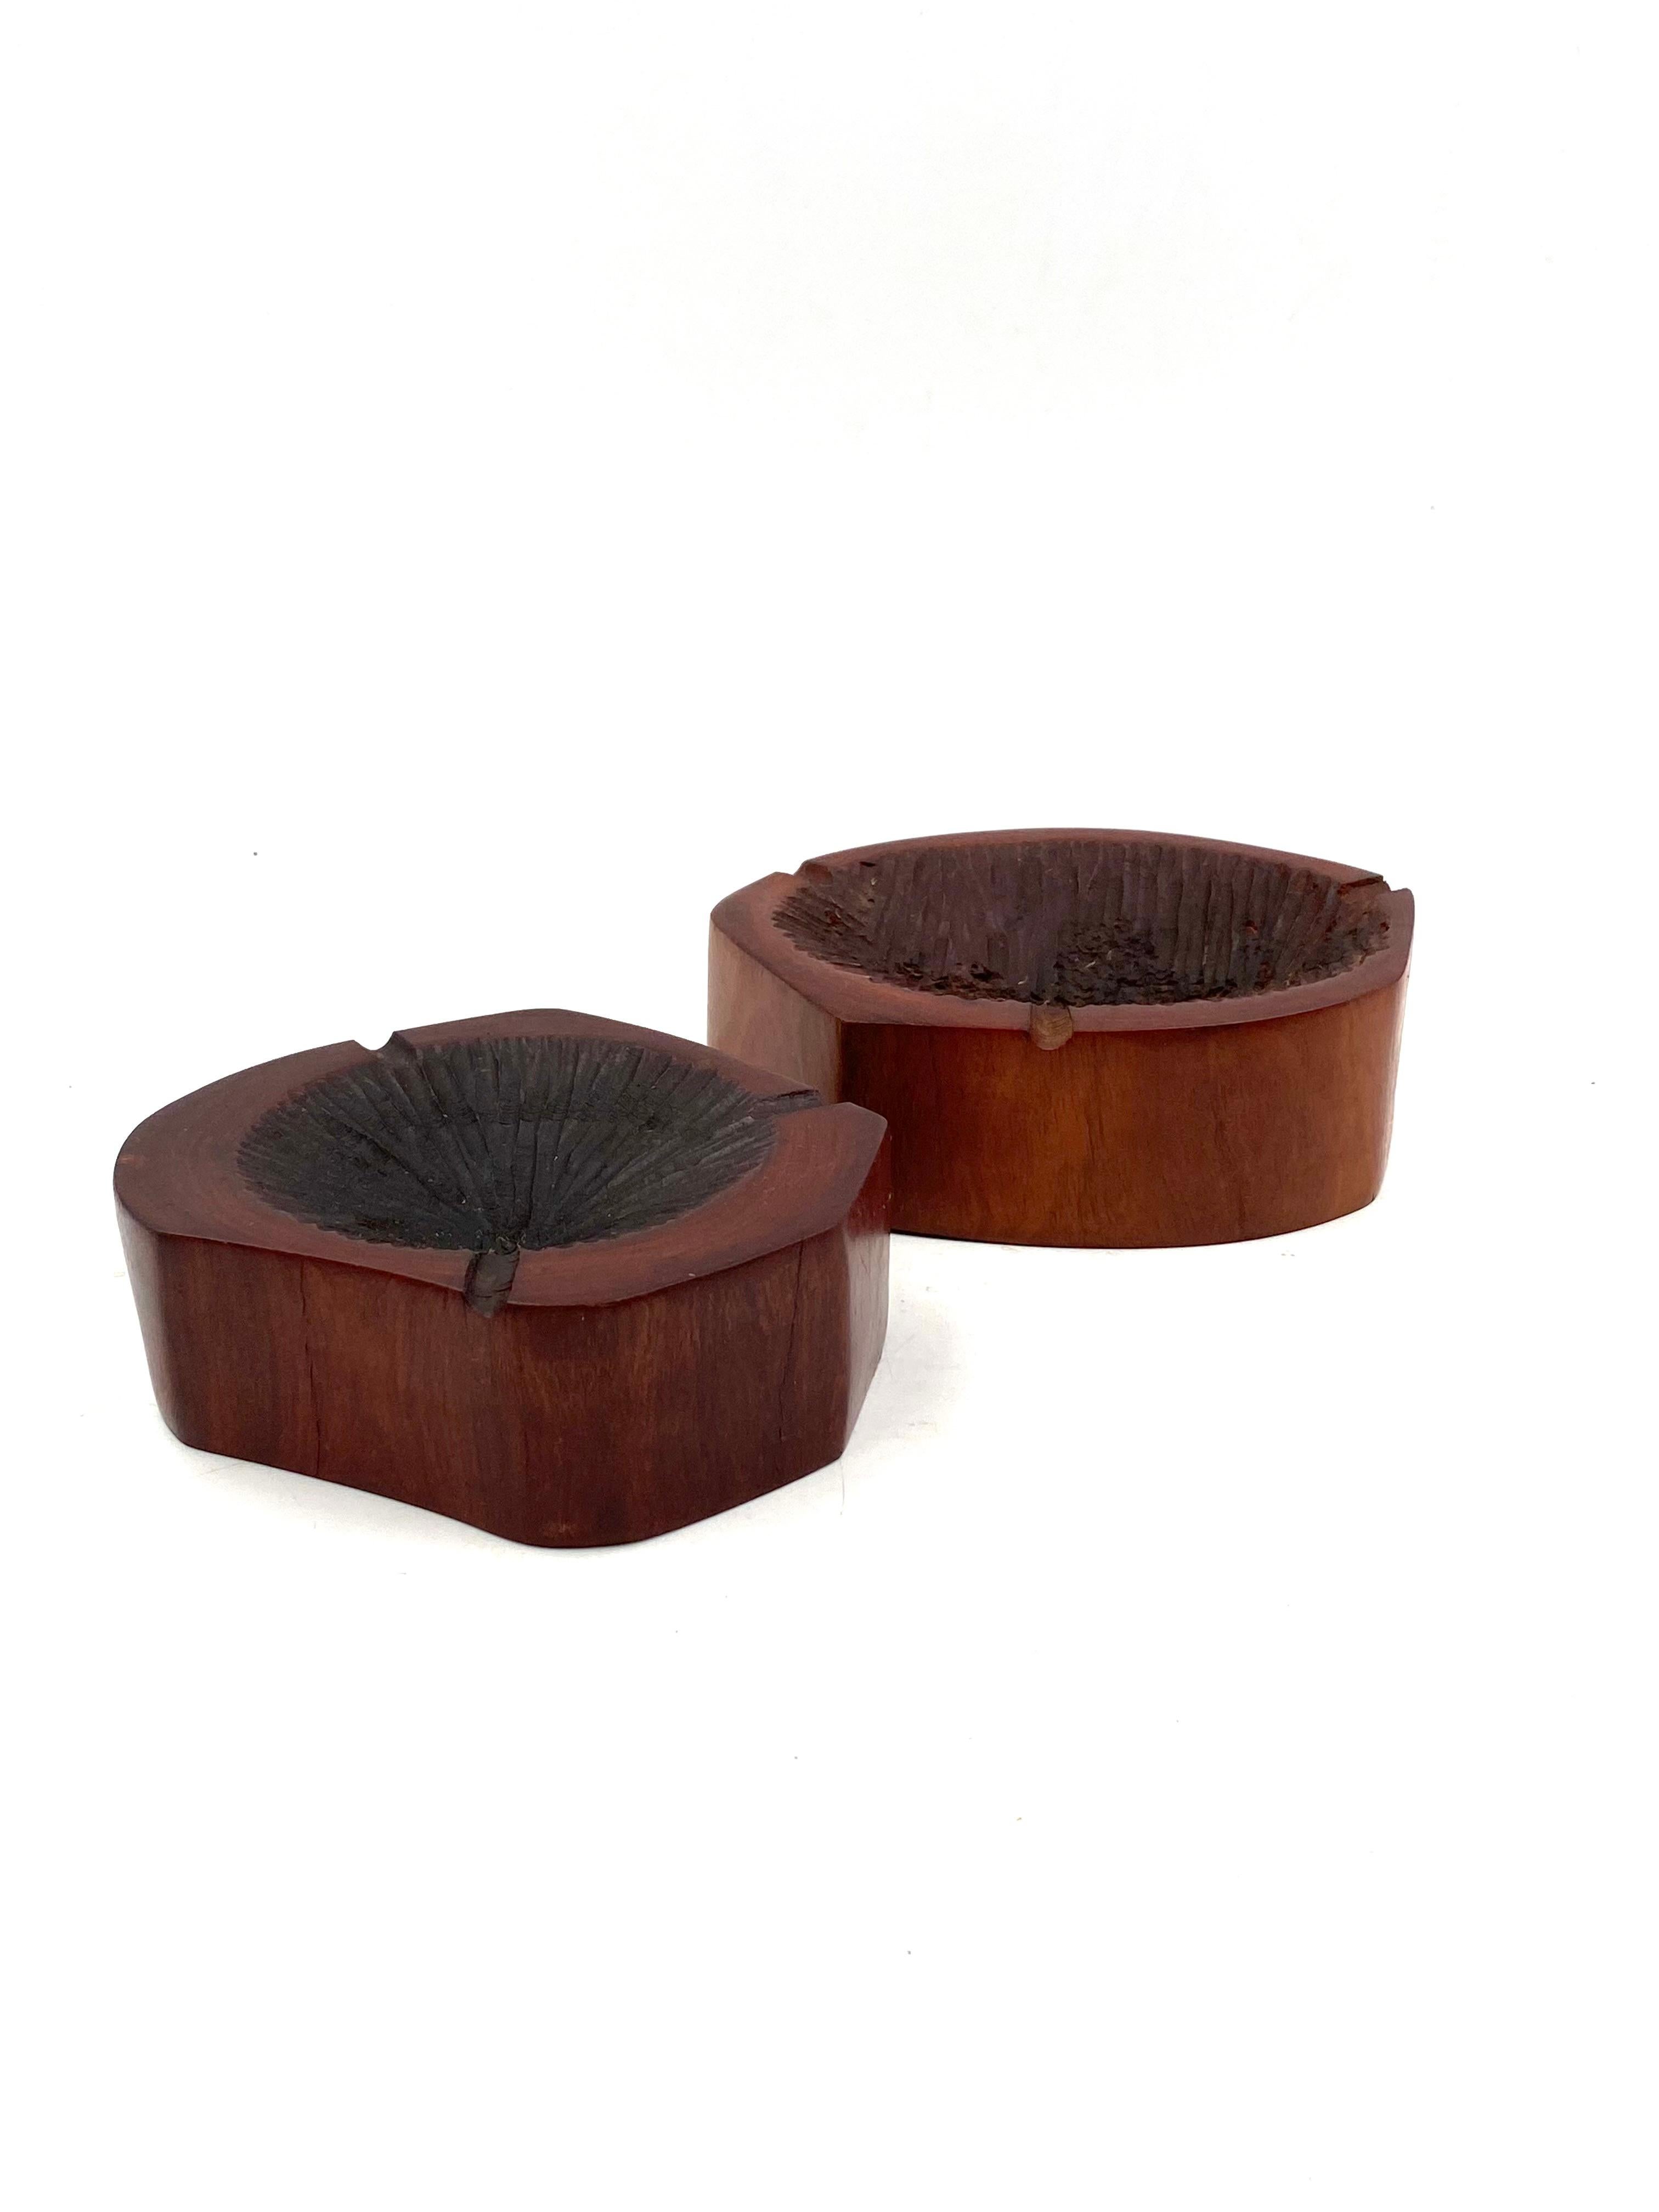 Organic modern set of 2 wood ashtrays, France 1970s For Sale 11